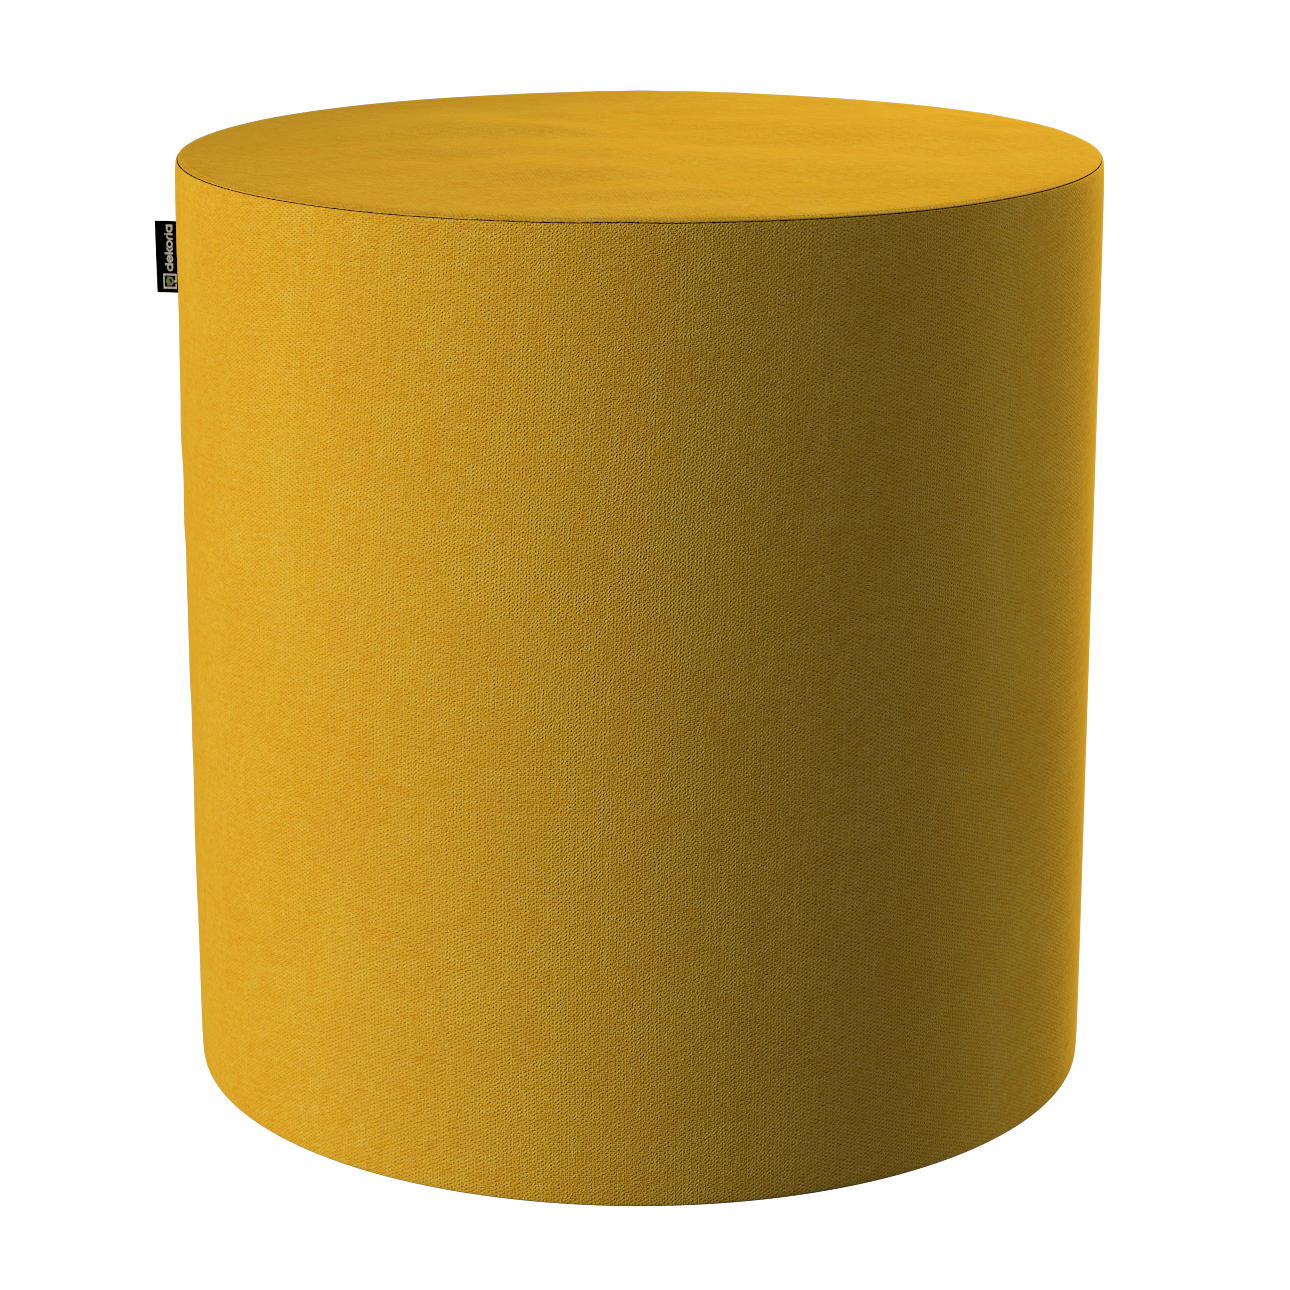 Pouf Barrel, senffarbe, ø40 cm x 40 cm, Etna (705-04) günstig online kaufen